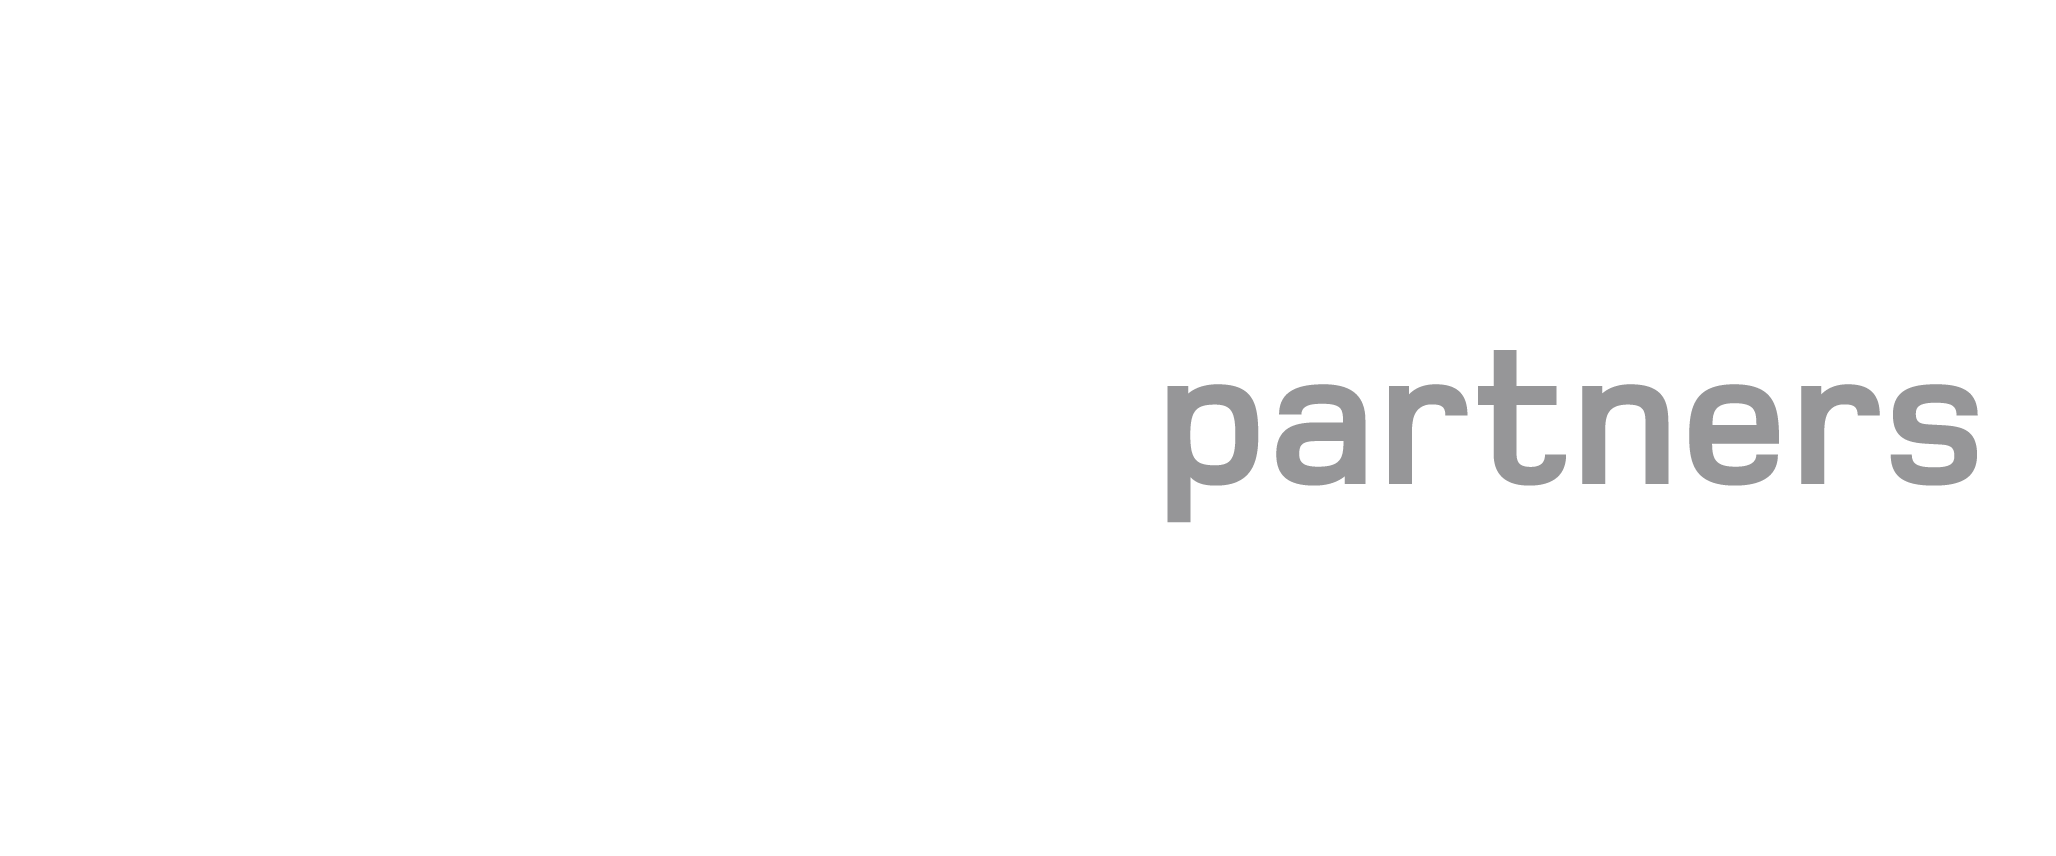 https://byronwritersfestival.com/wp-content/uploads/2016/04/Greenstone_website_logo.png